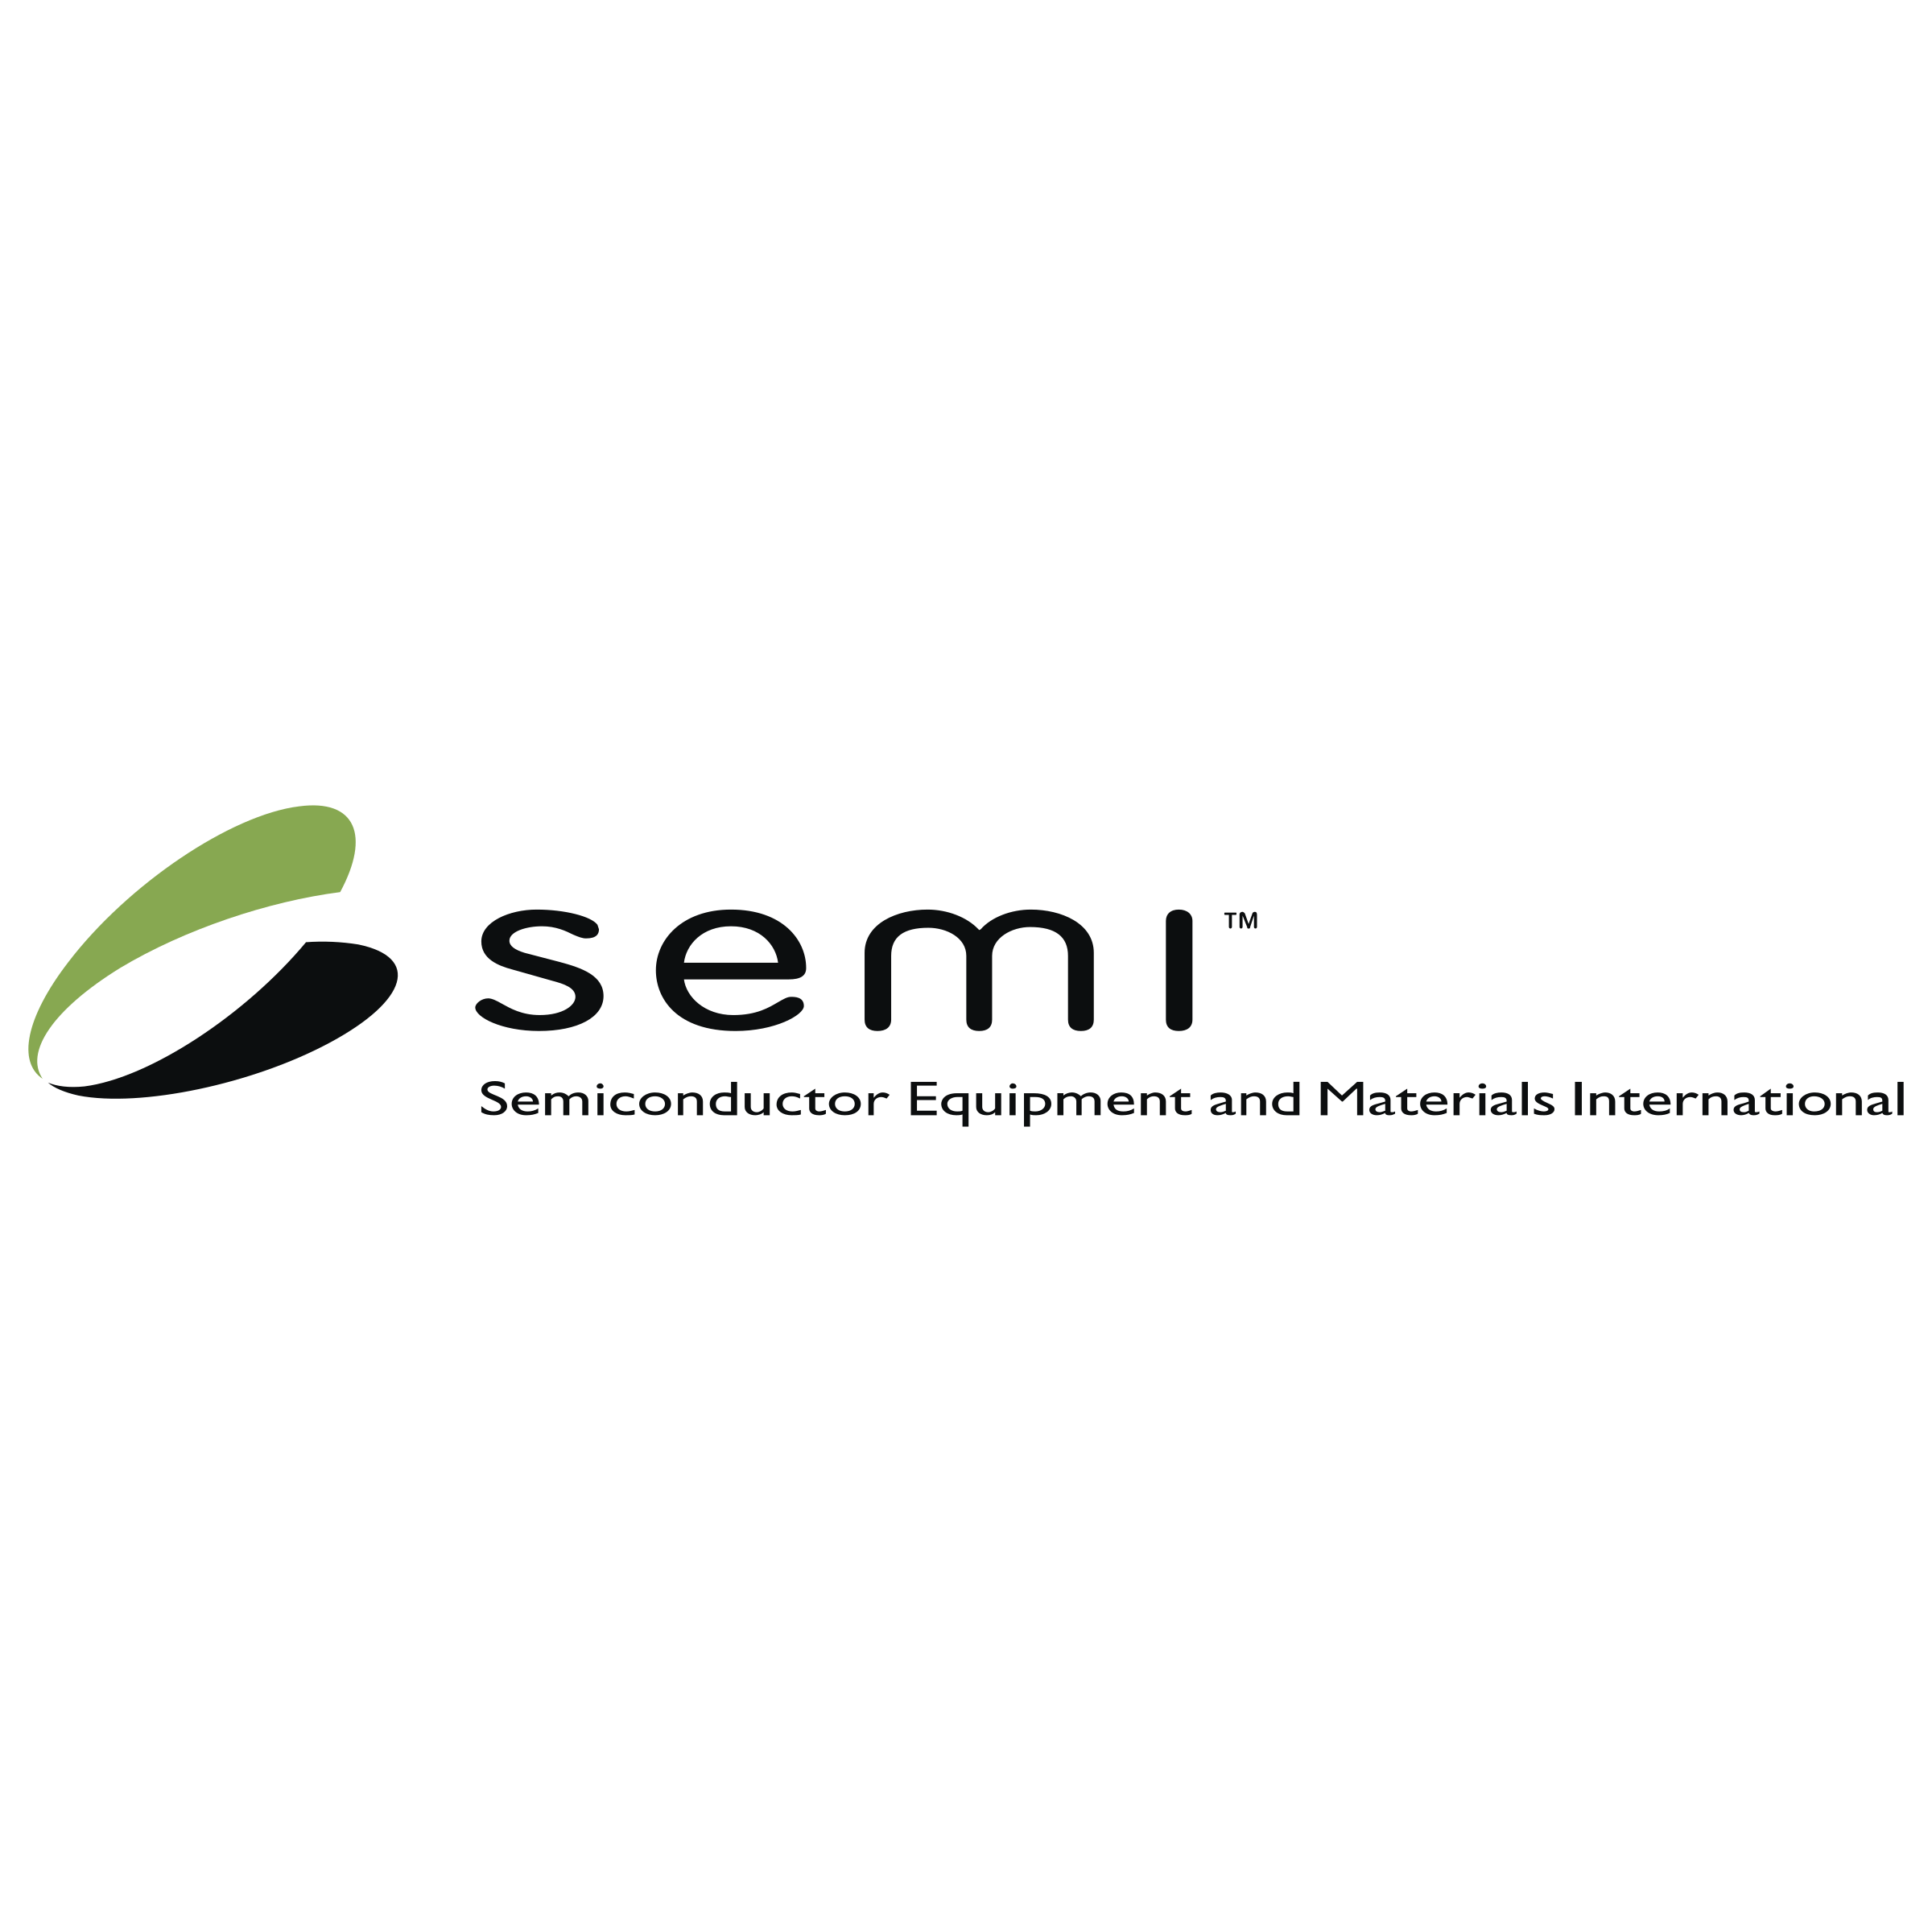 Semi Logo - Semi Logo PNG Transparent & SVG Vector - Freebie Supply